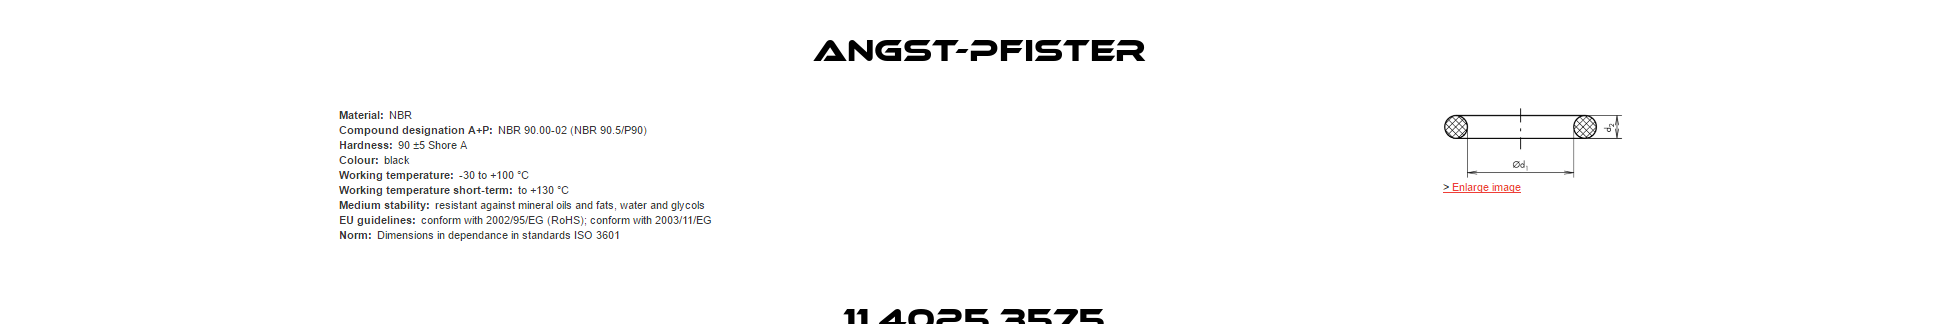 11.4025.3575  Angst-Pfister